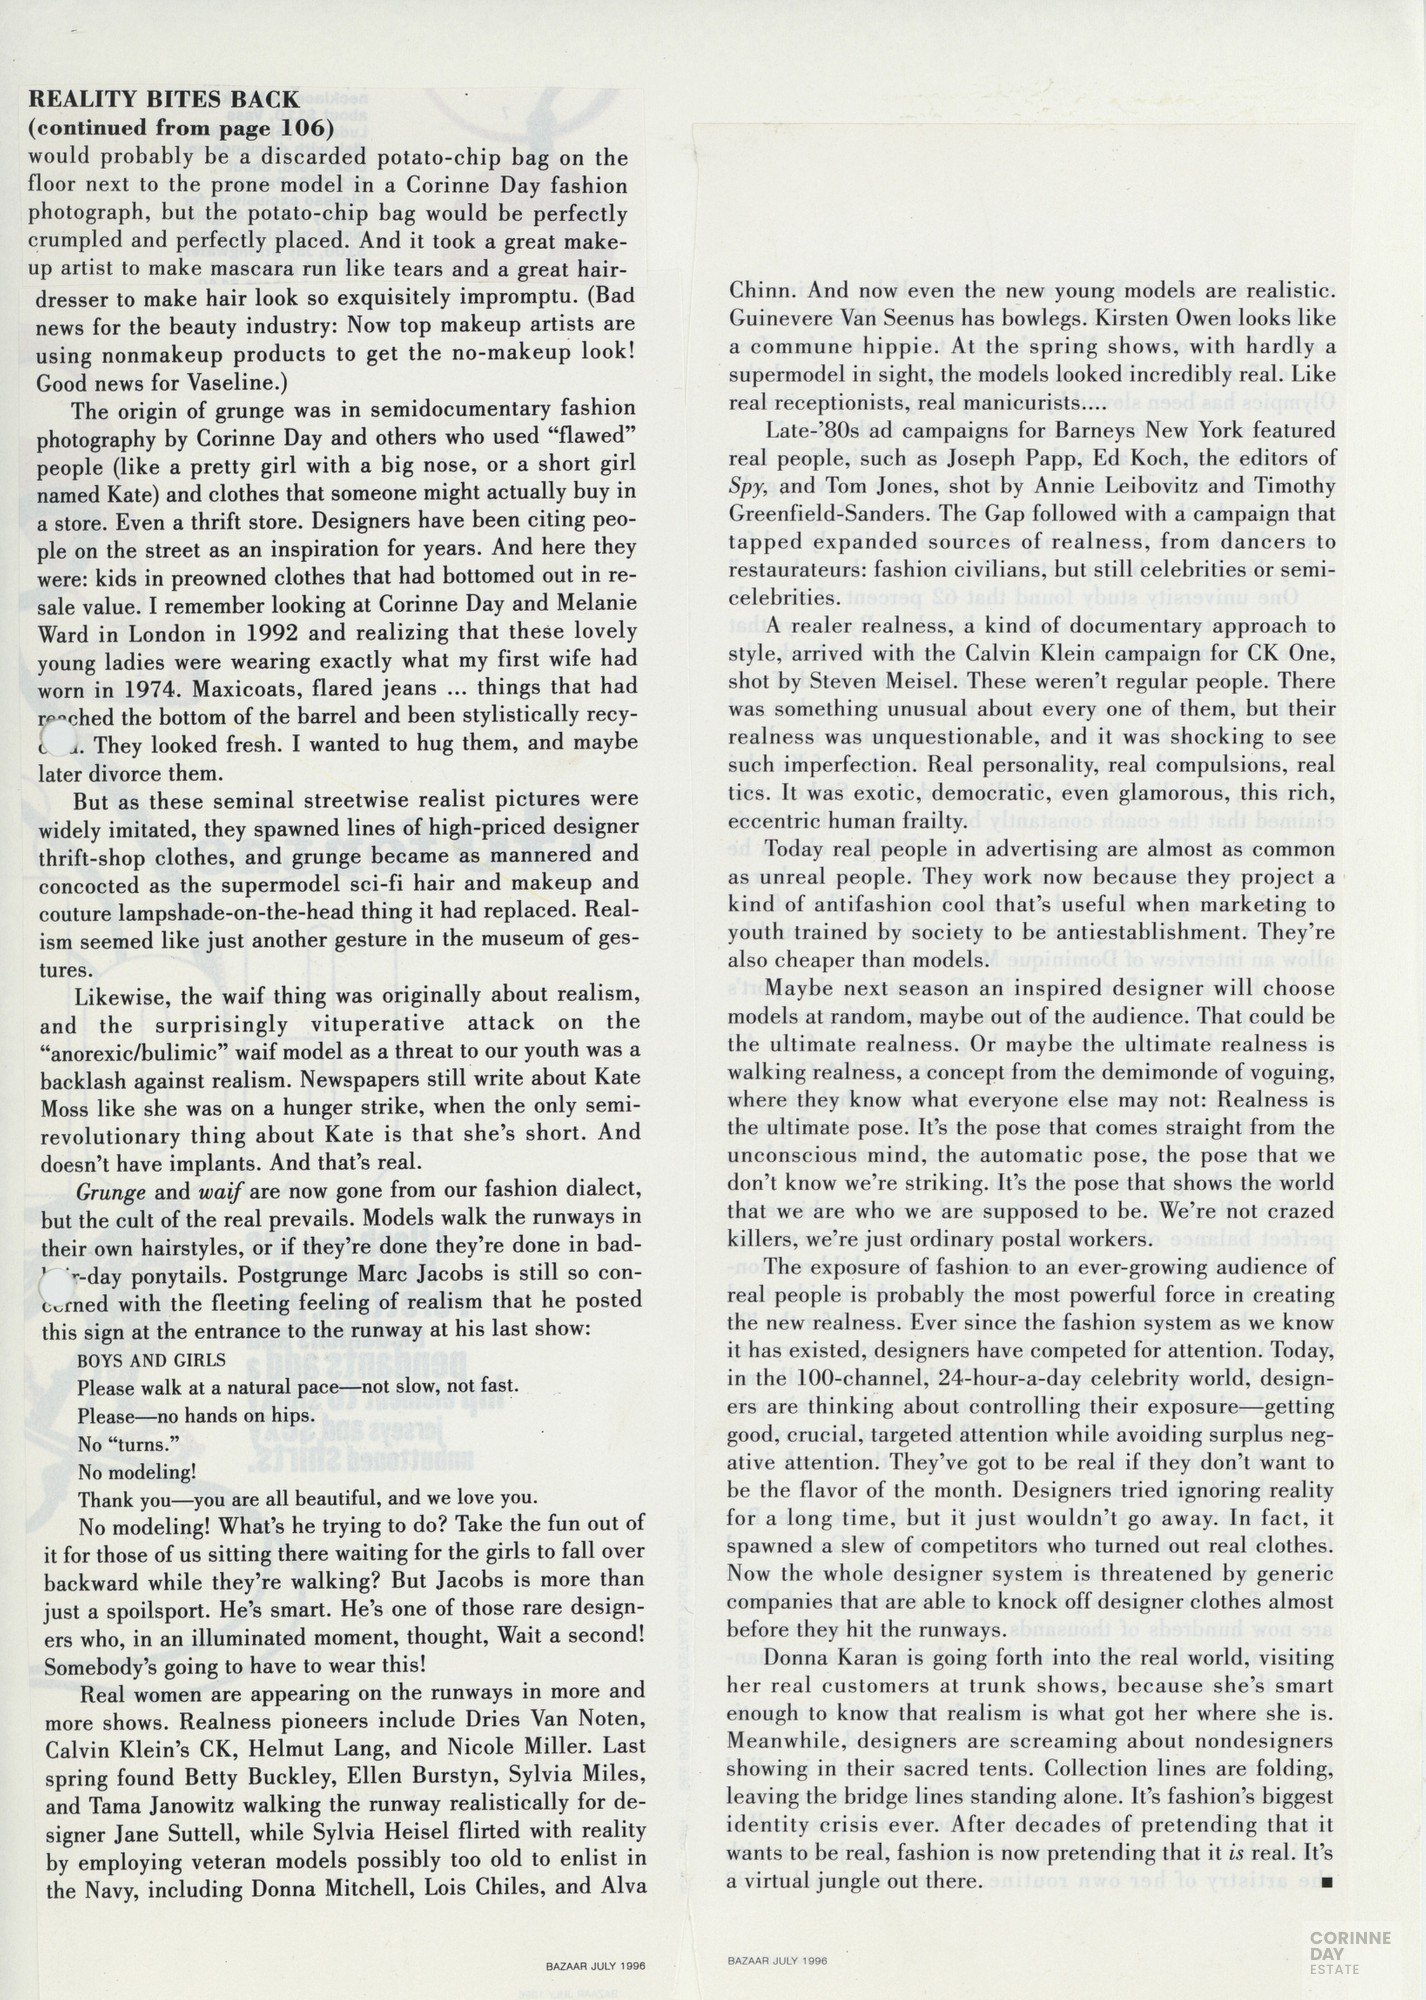 Reality Bites Back, Harper's Bazaar, Jul 1996 — Image 2 of 2